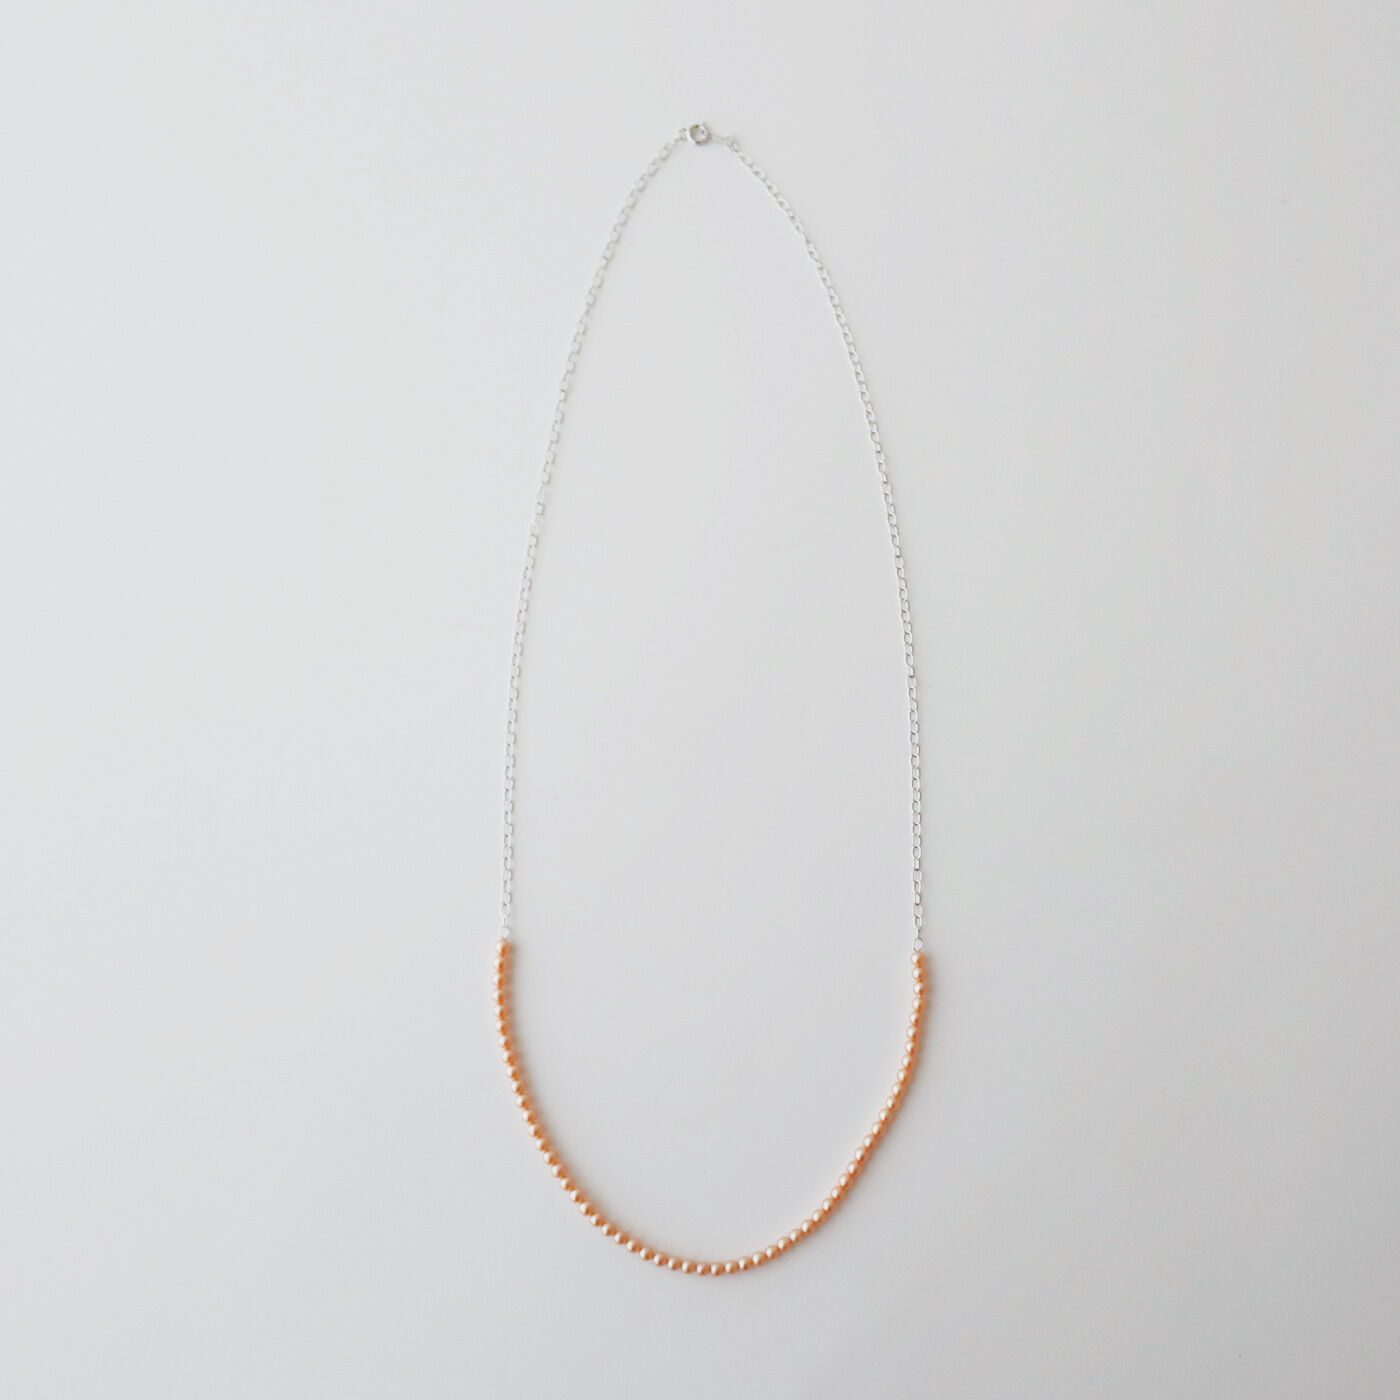 ＆Stories|神戸の老舗真珠メーカーと作った ピーチメルバパールのチェーンネックレス〈シルバー925〉|全長約60cmのロングタイプのネックレス。